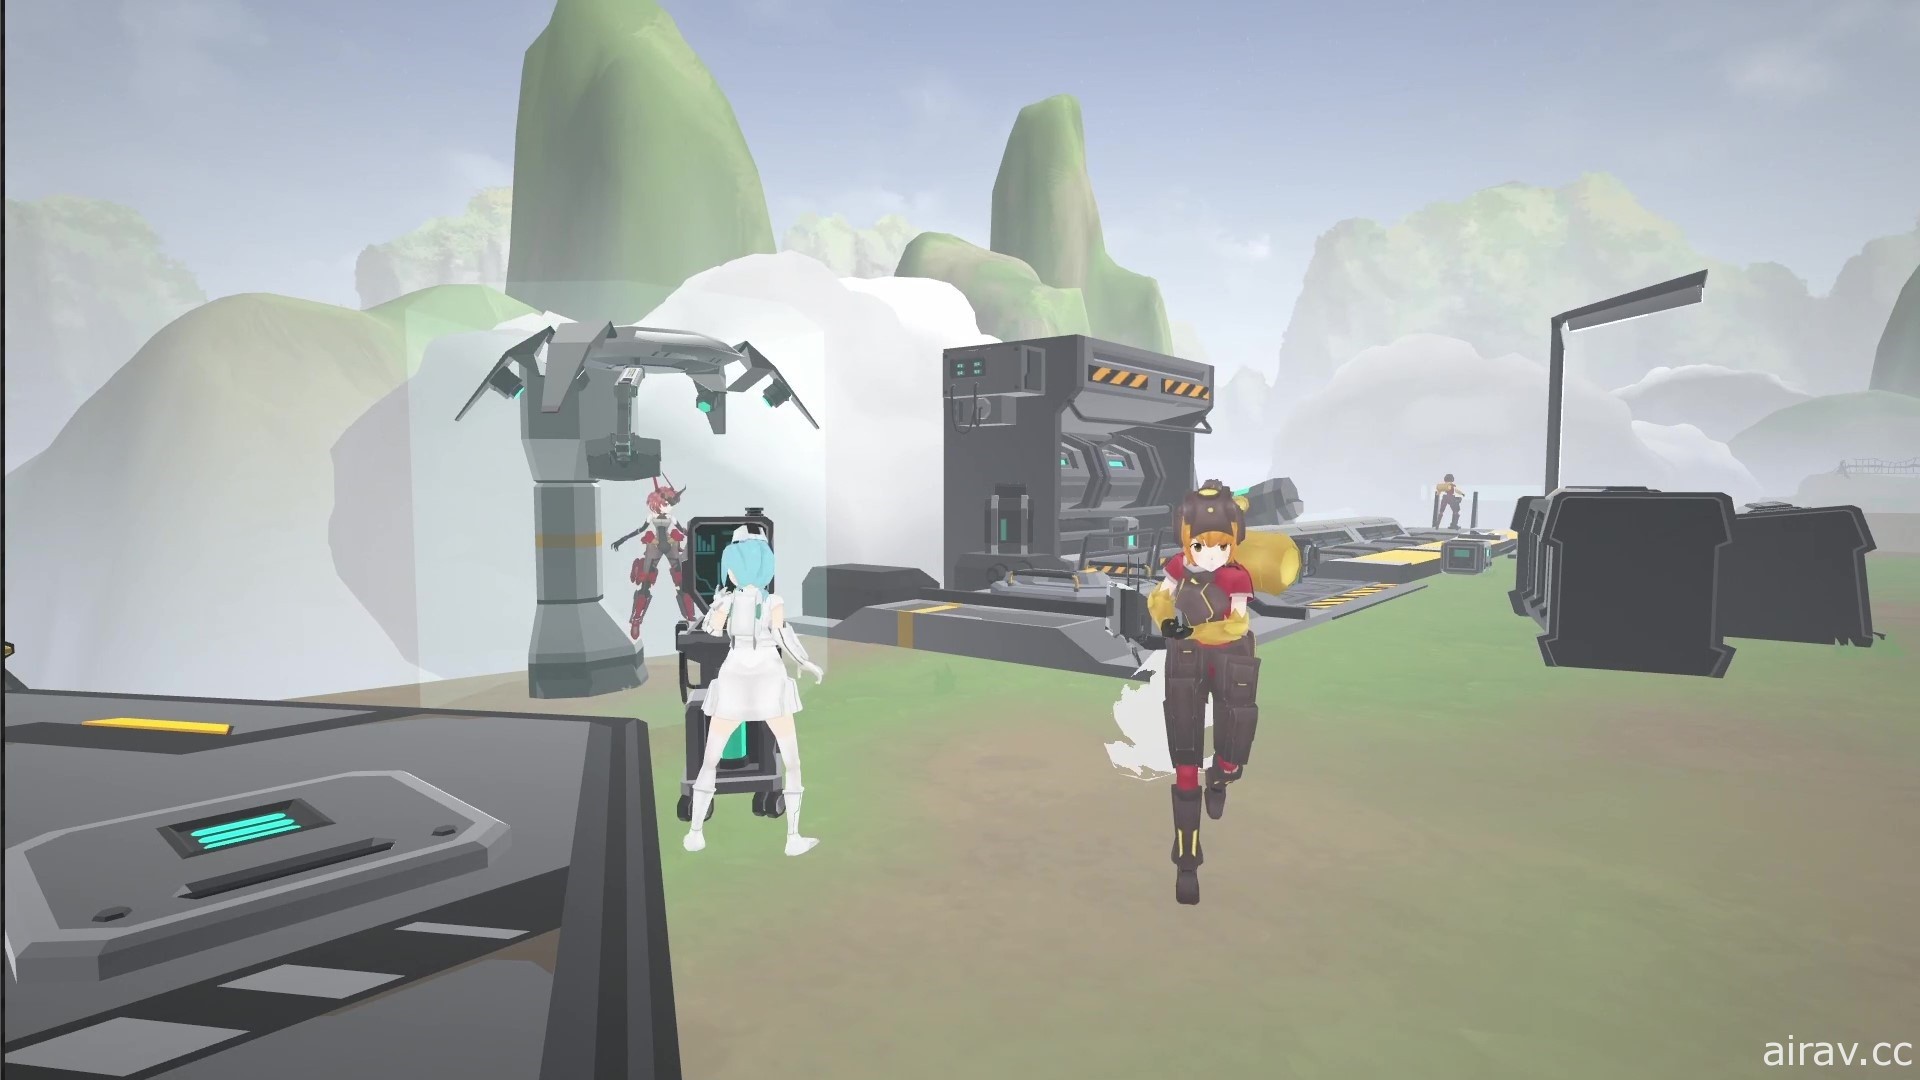 【TpGS 22】机甲科幻 VR 动作射击游戏《星剑特攻》将开放试玩